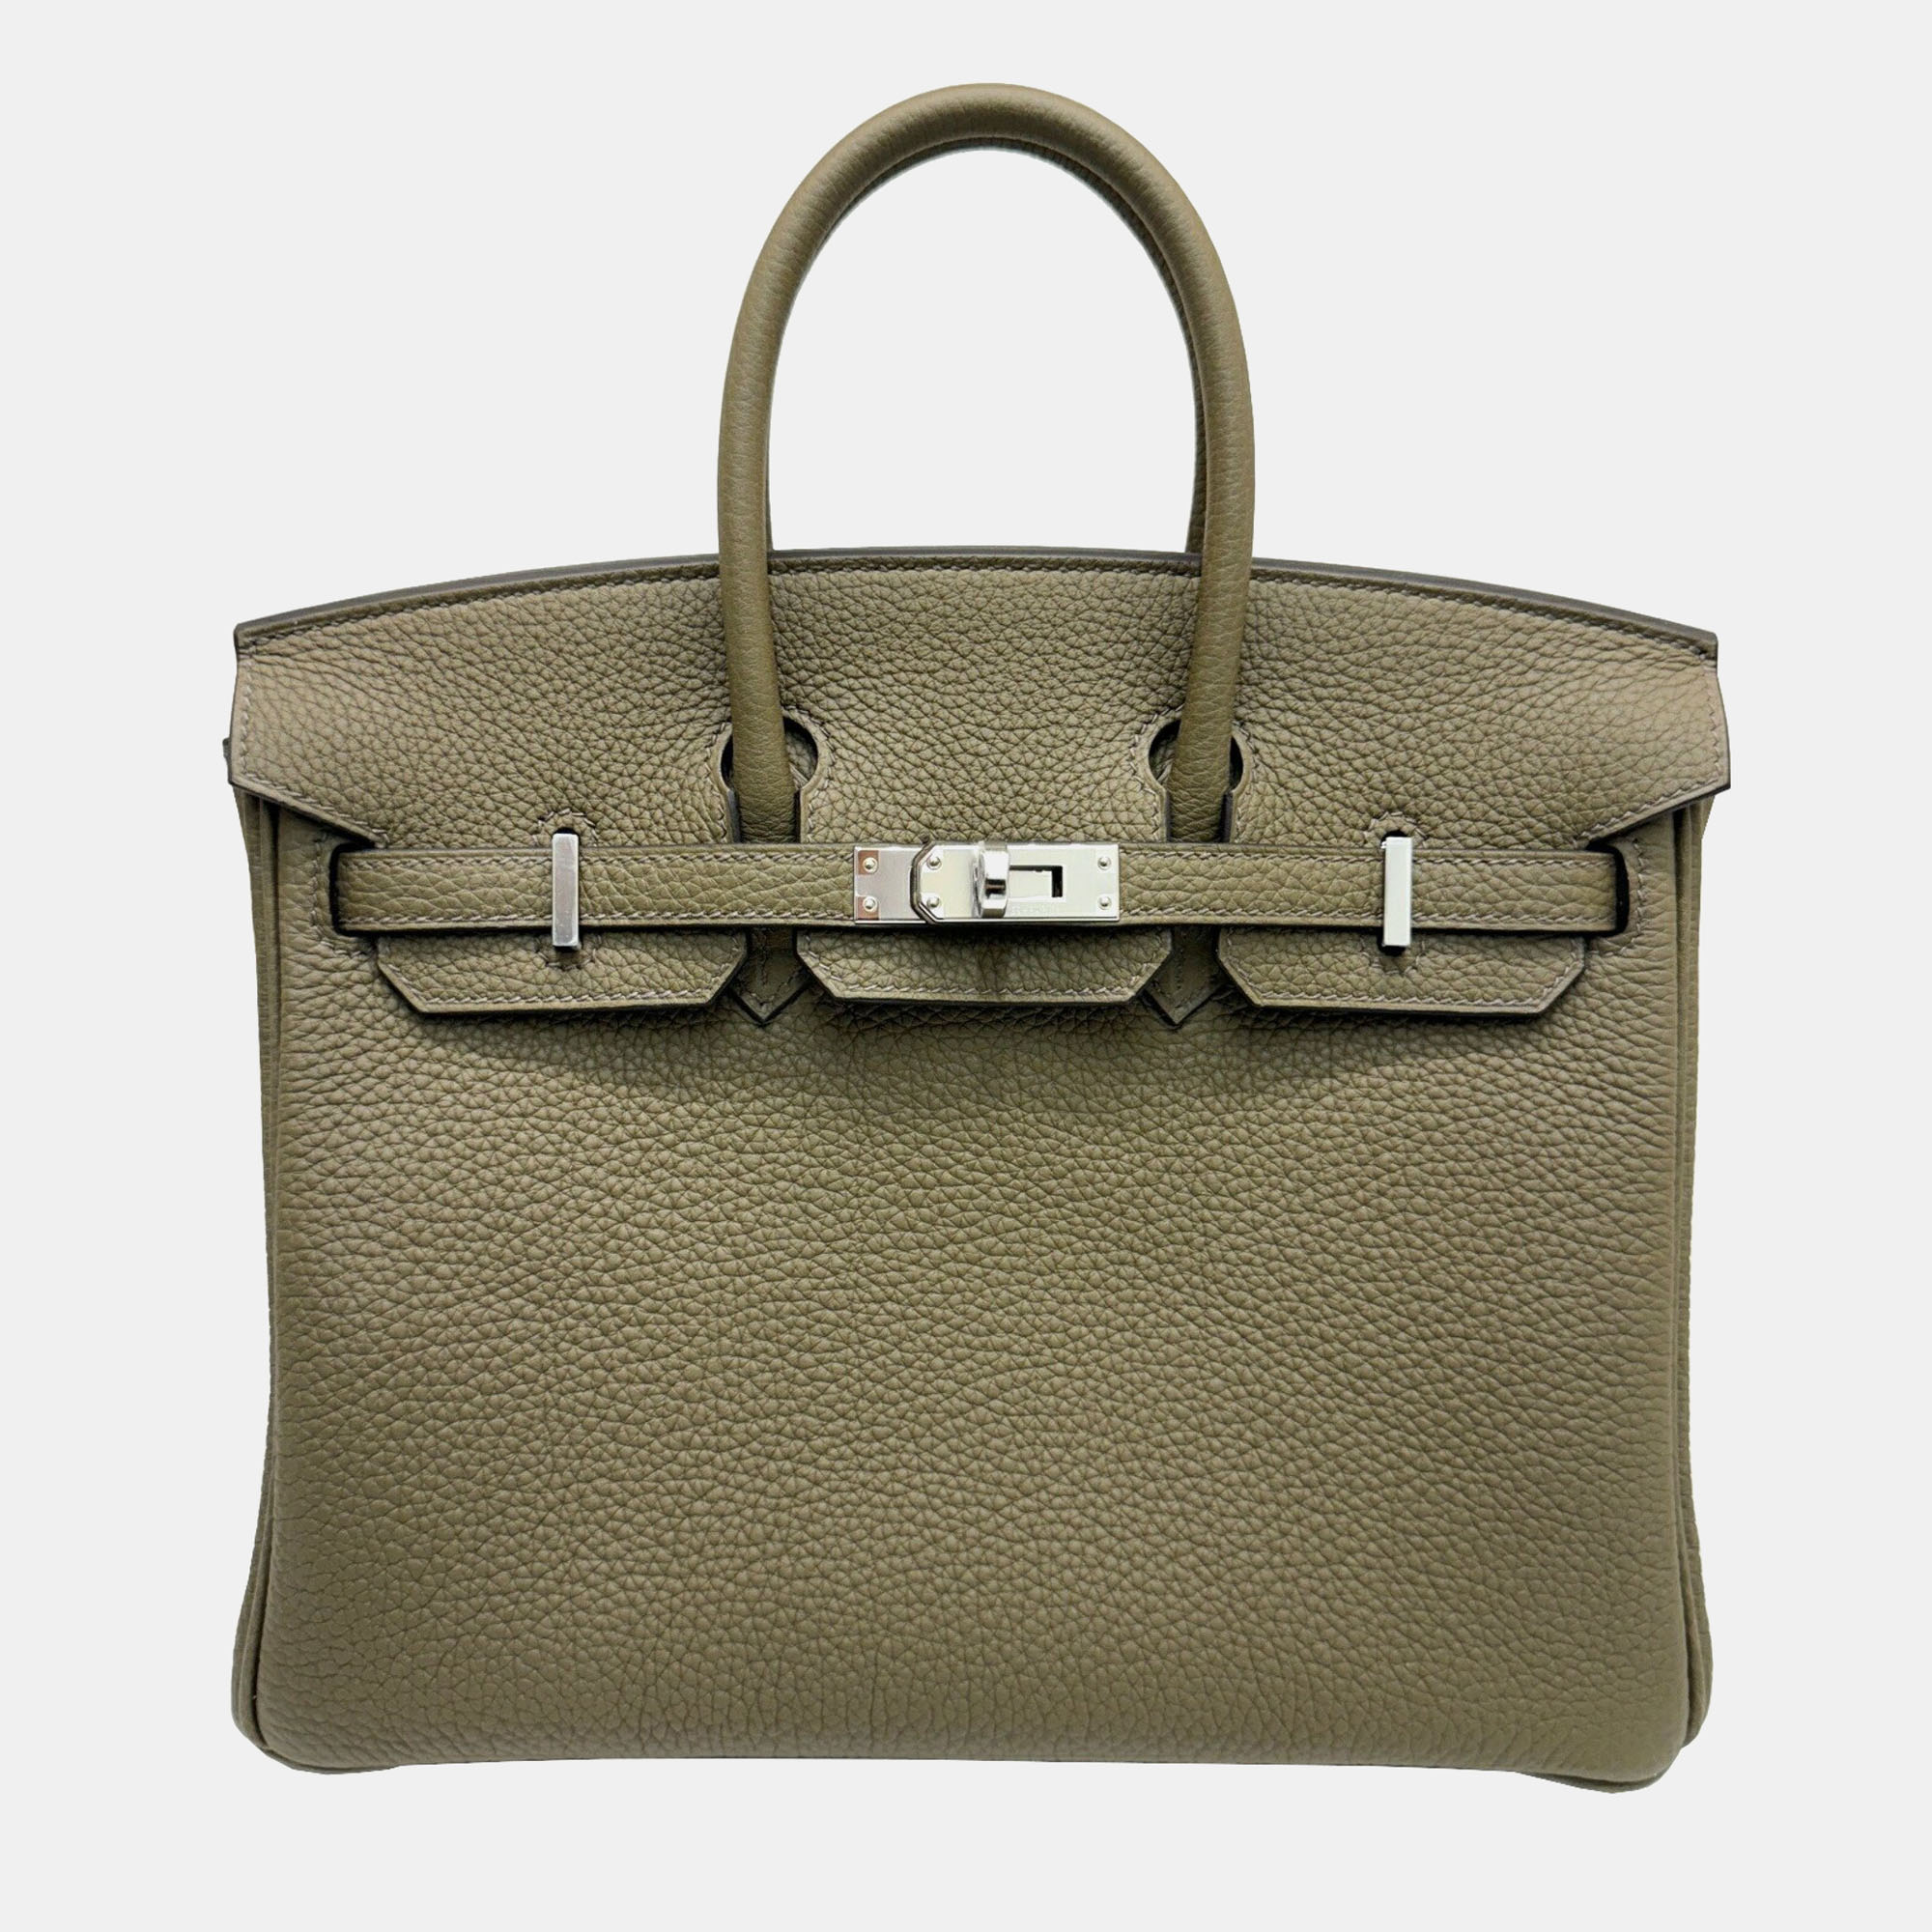 Hermes grey togo leather birkin 25 tote bag